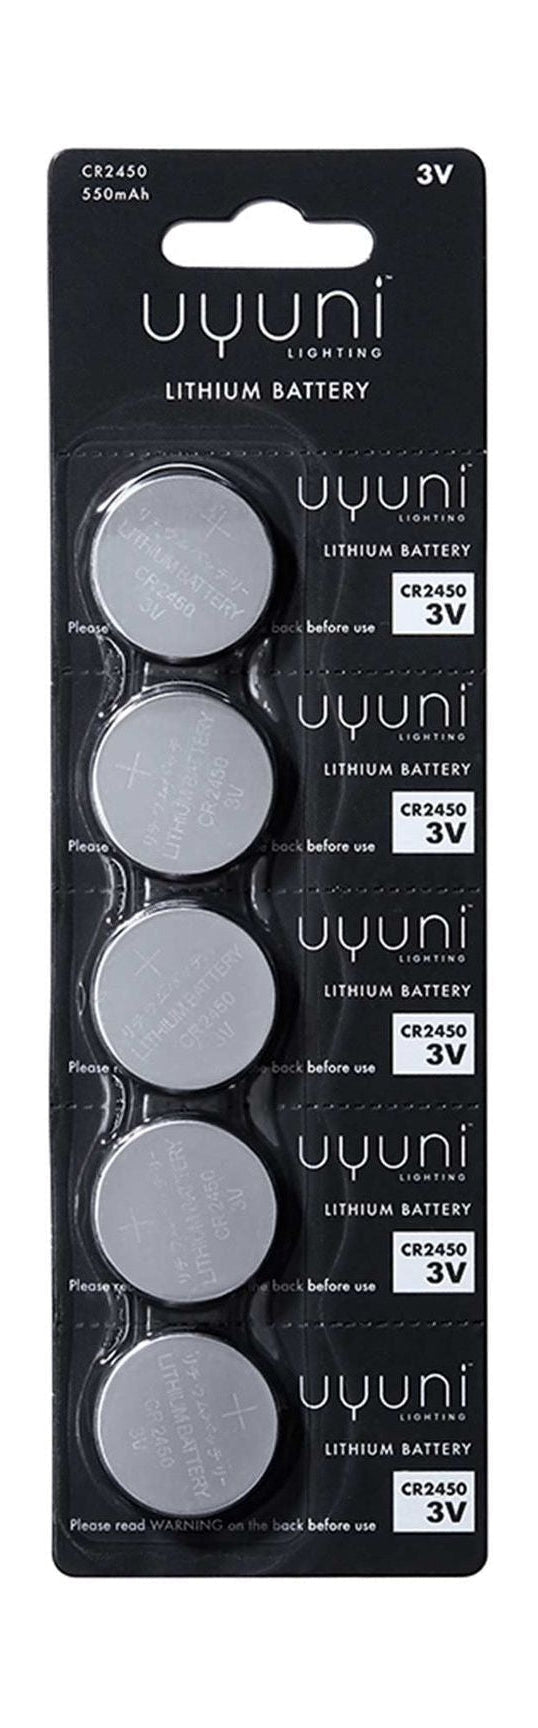 Uyuni Lighting CR2450 Lithiumbatterien 5 Pak